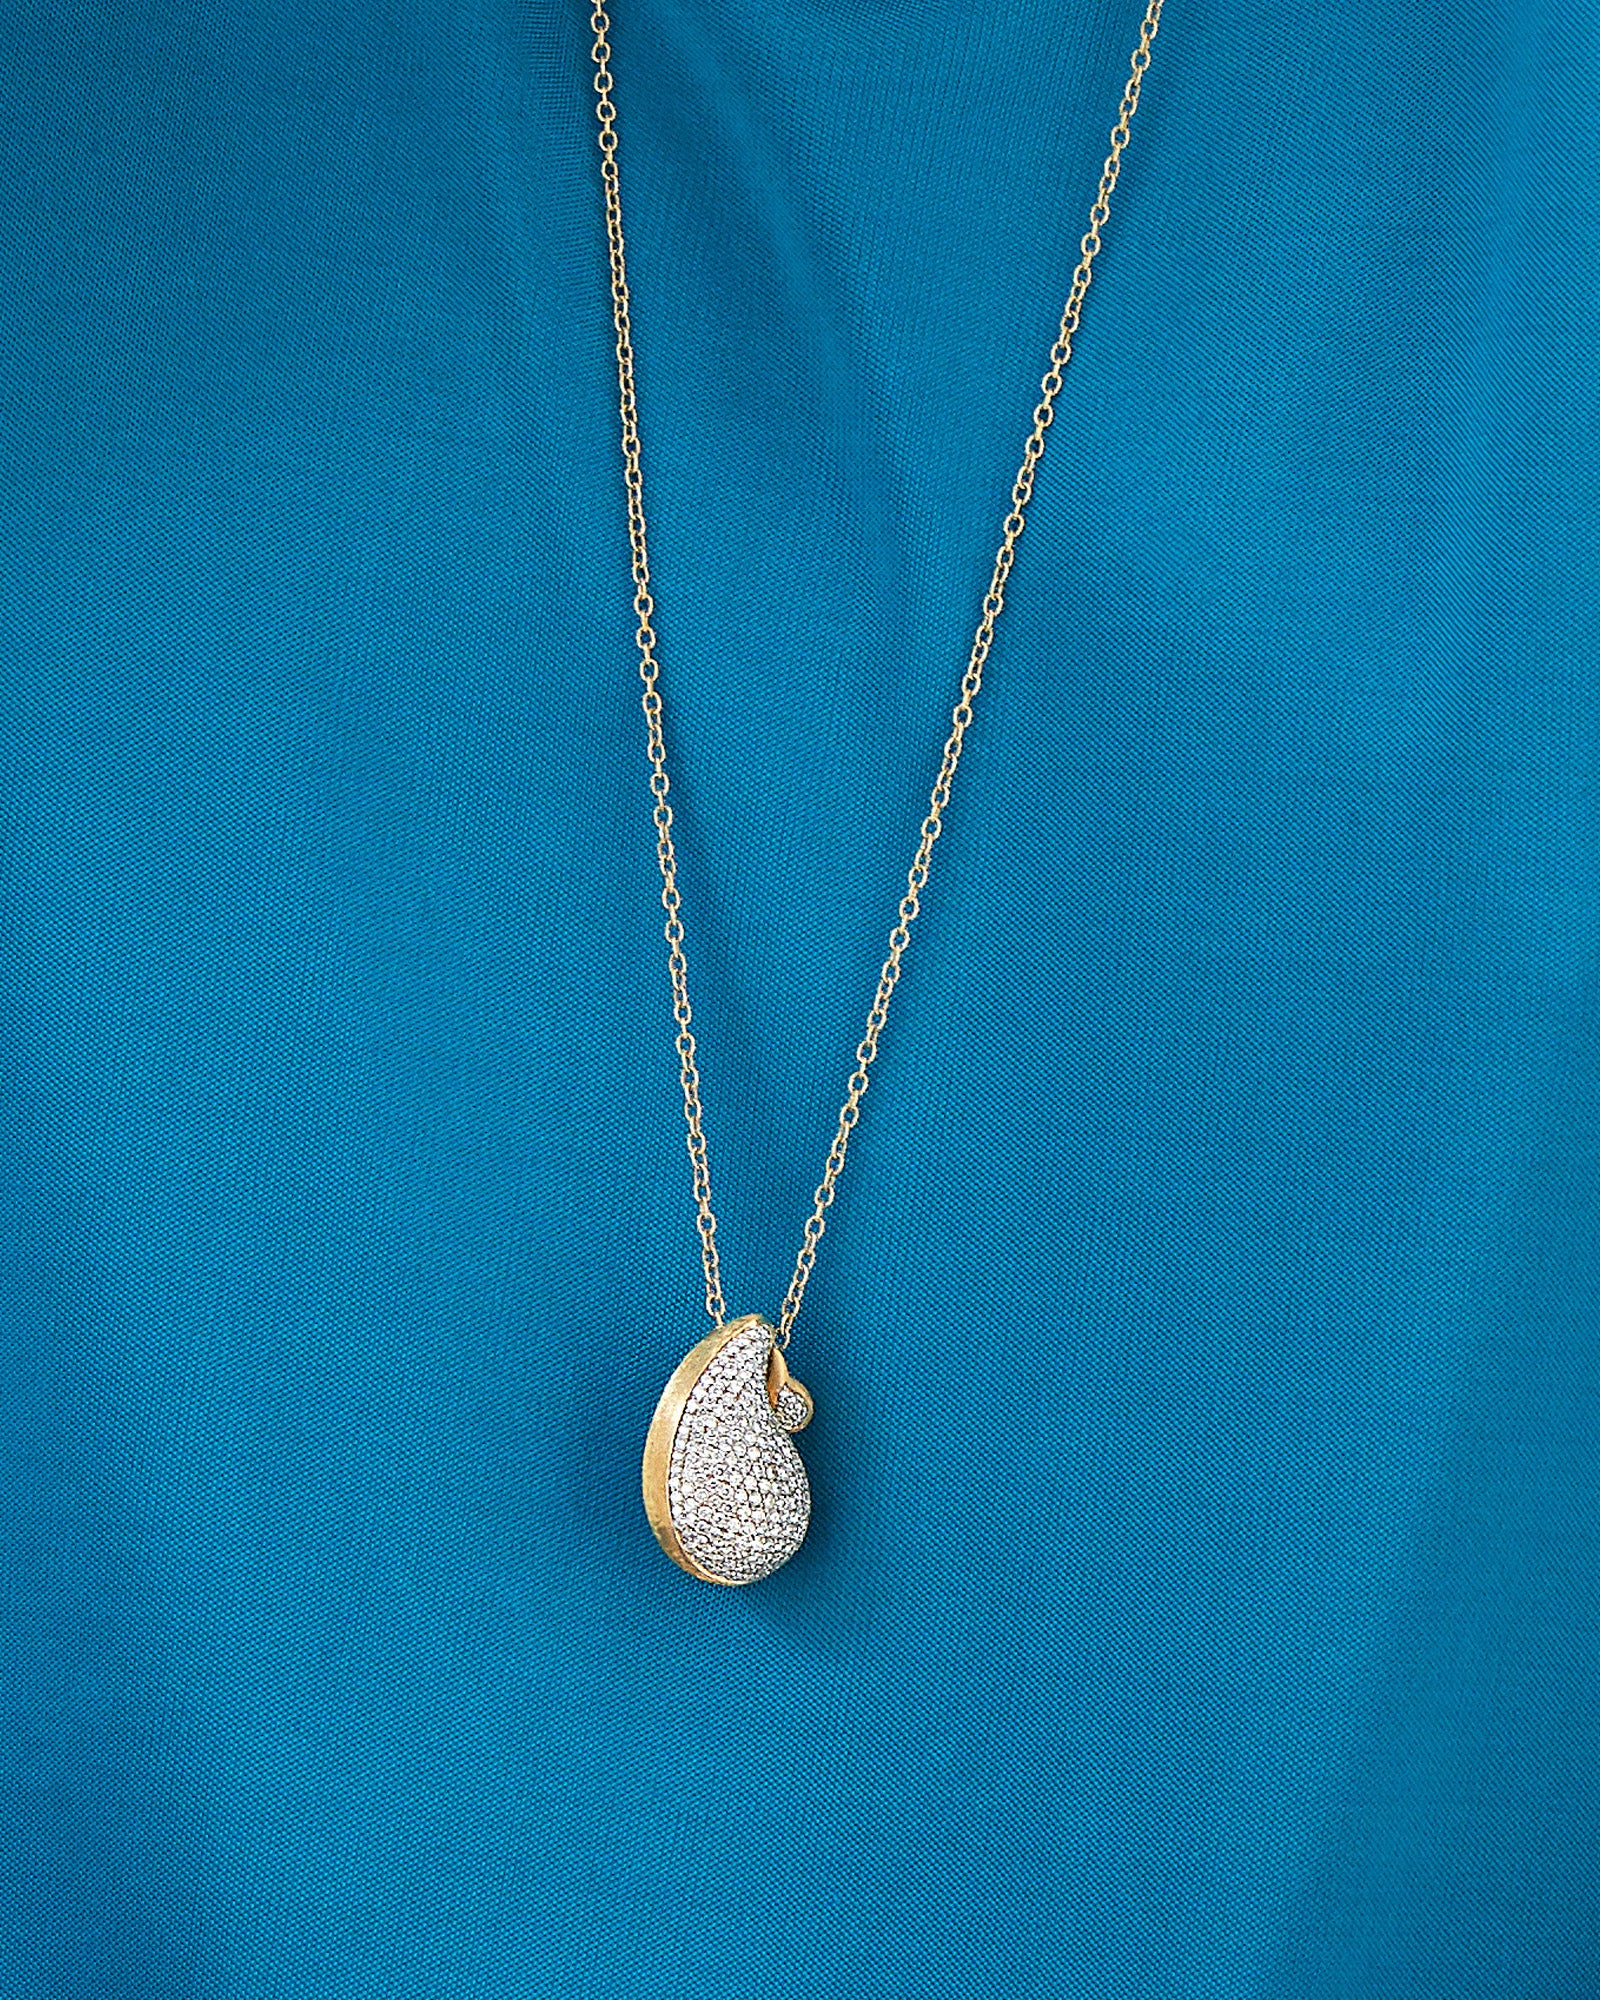 "Trasformista" Gold, Cachemire and Diamonds necklace